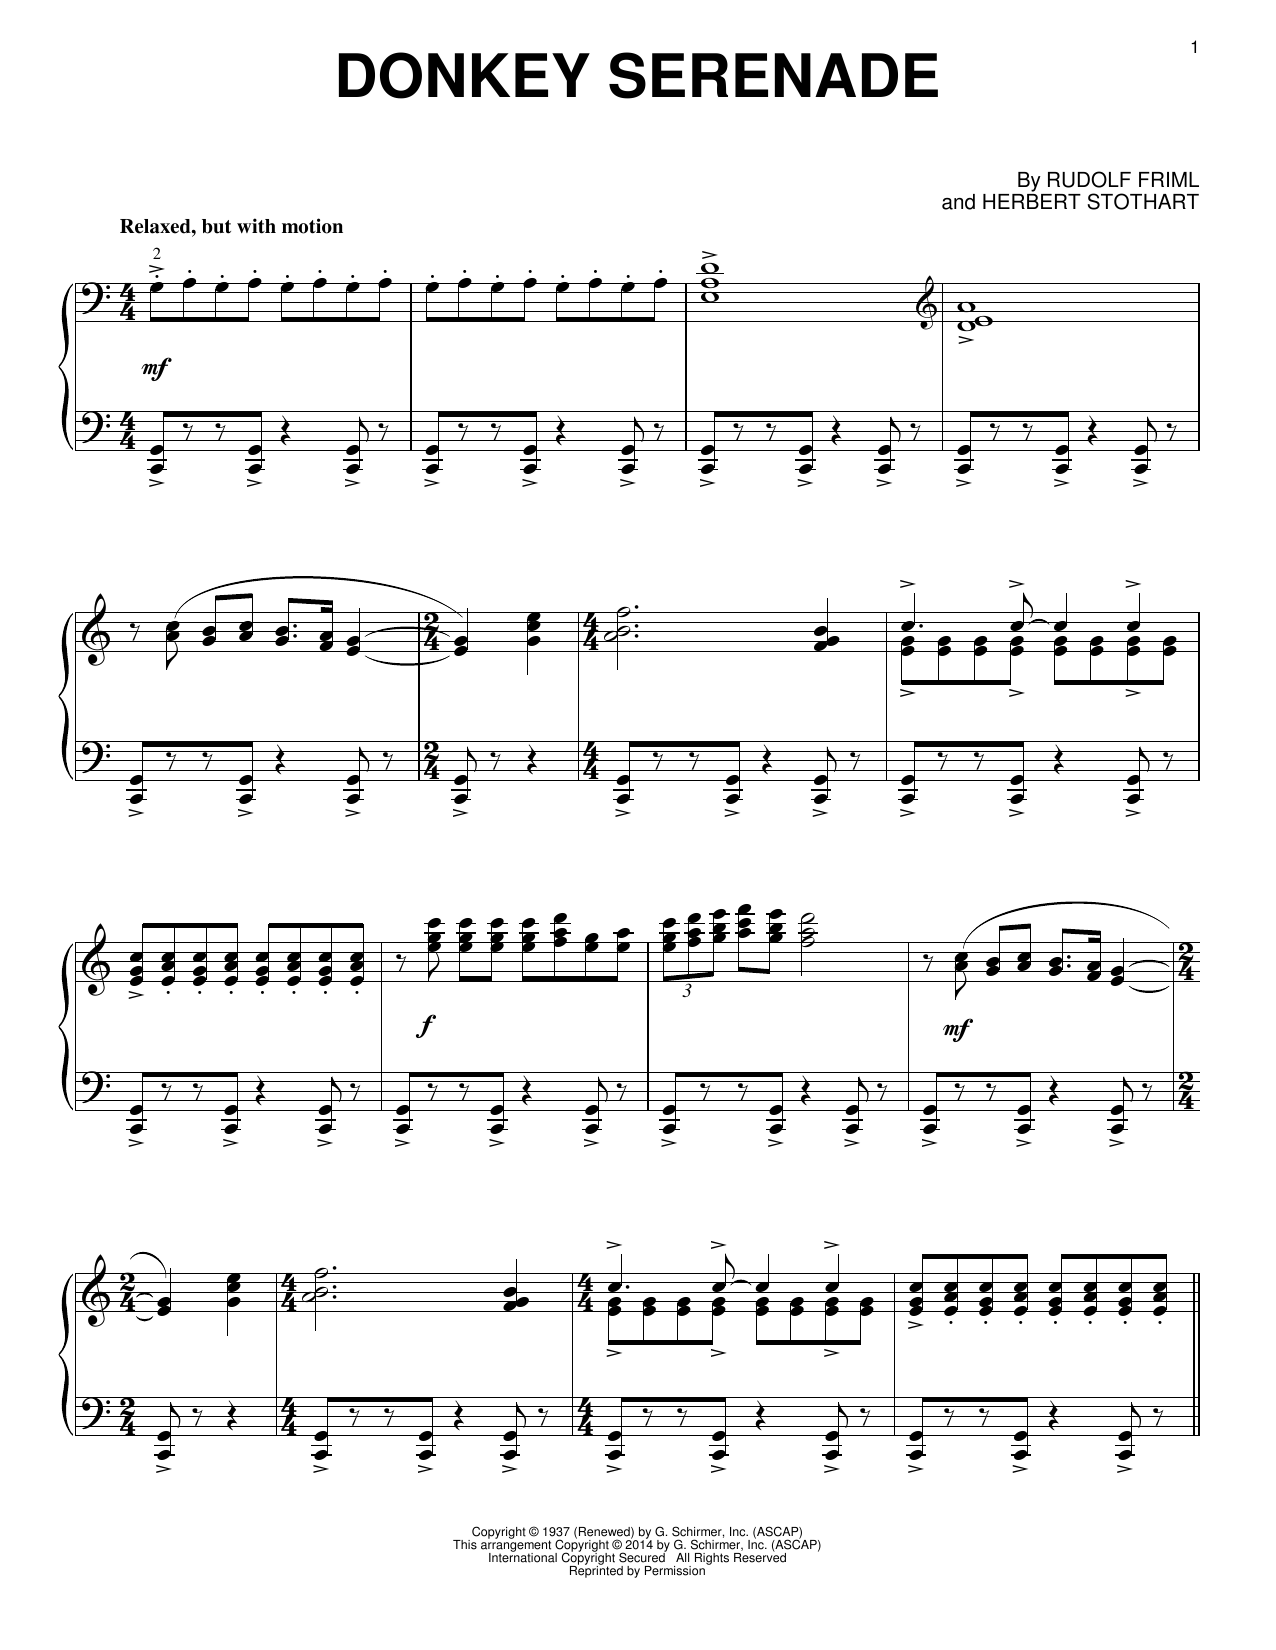 Herbert Stothart Donkey Serenade Sheet Music Notes & Chords for Piano - Download or Print PDF